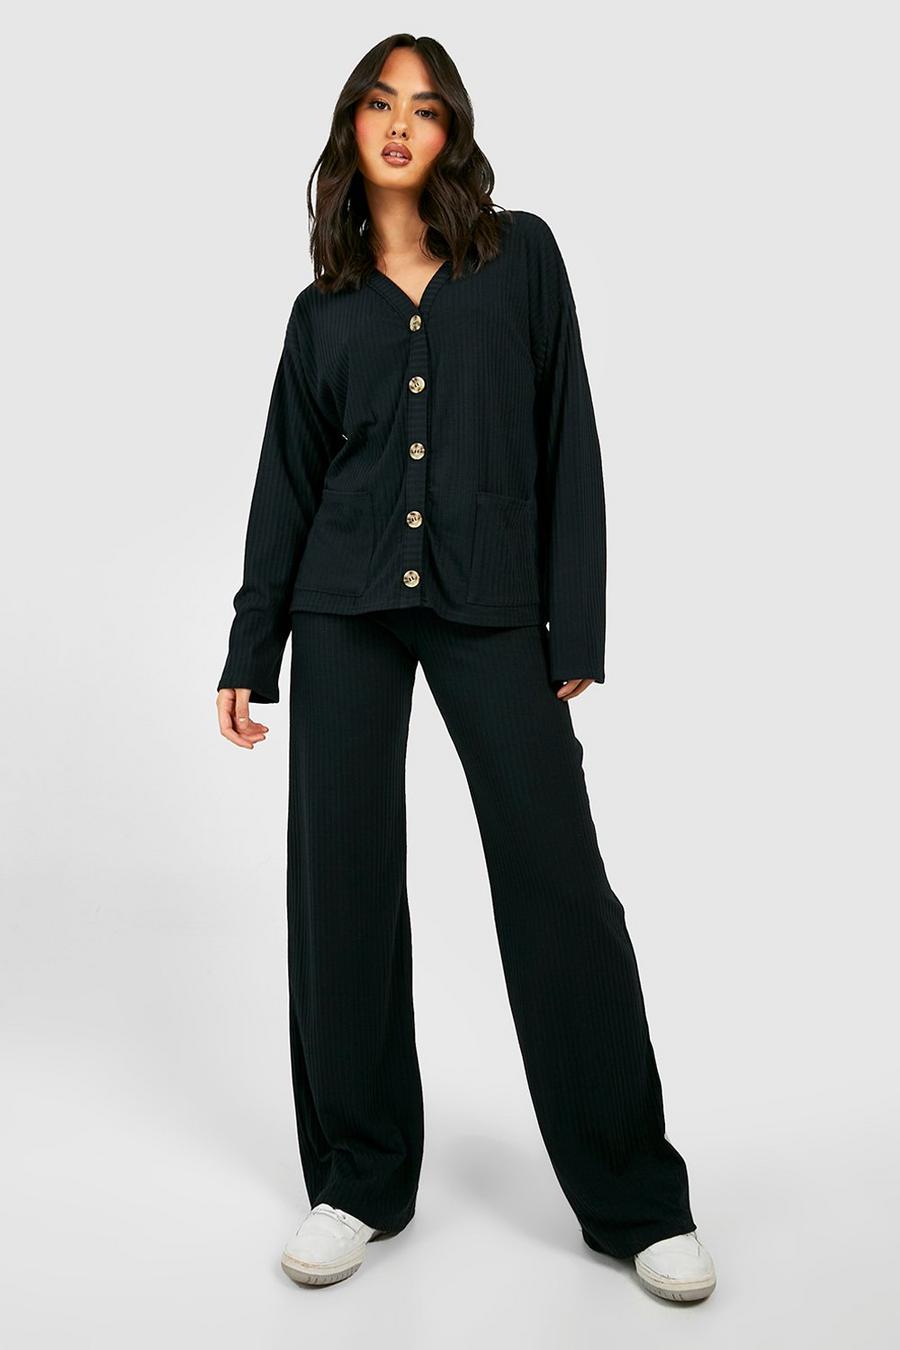 Black Rib Knit Buttoned Cardigan & Pants Co-Ord